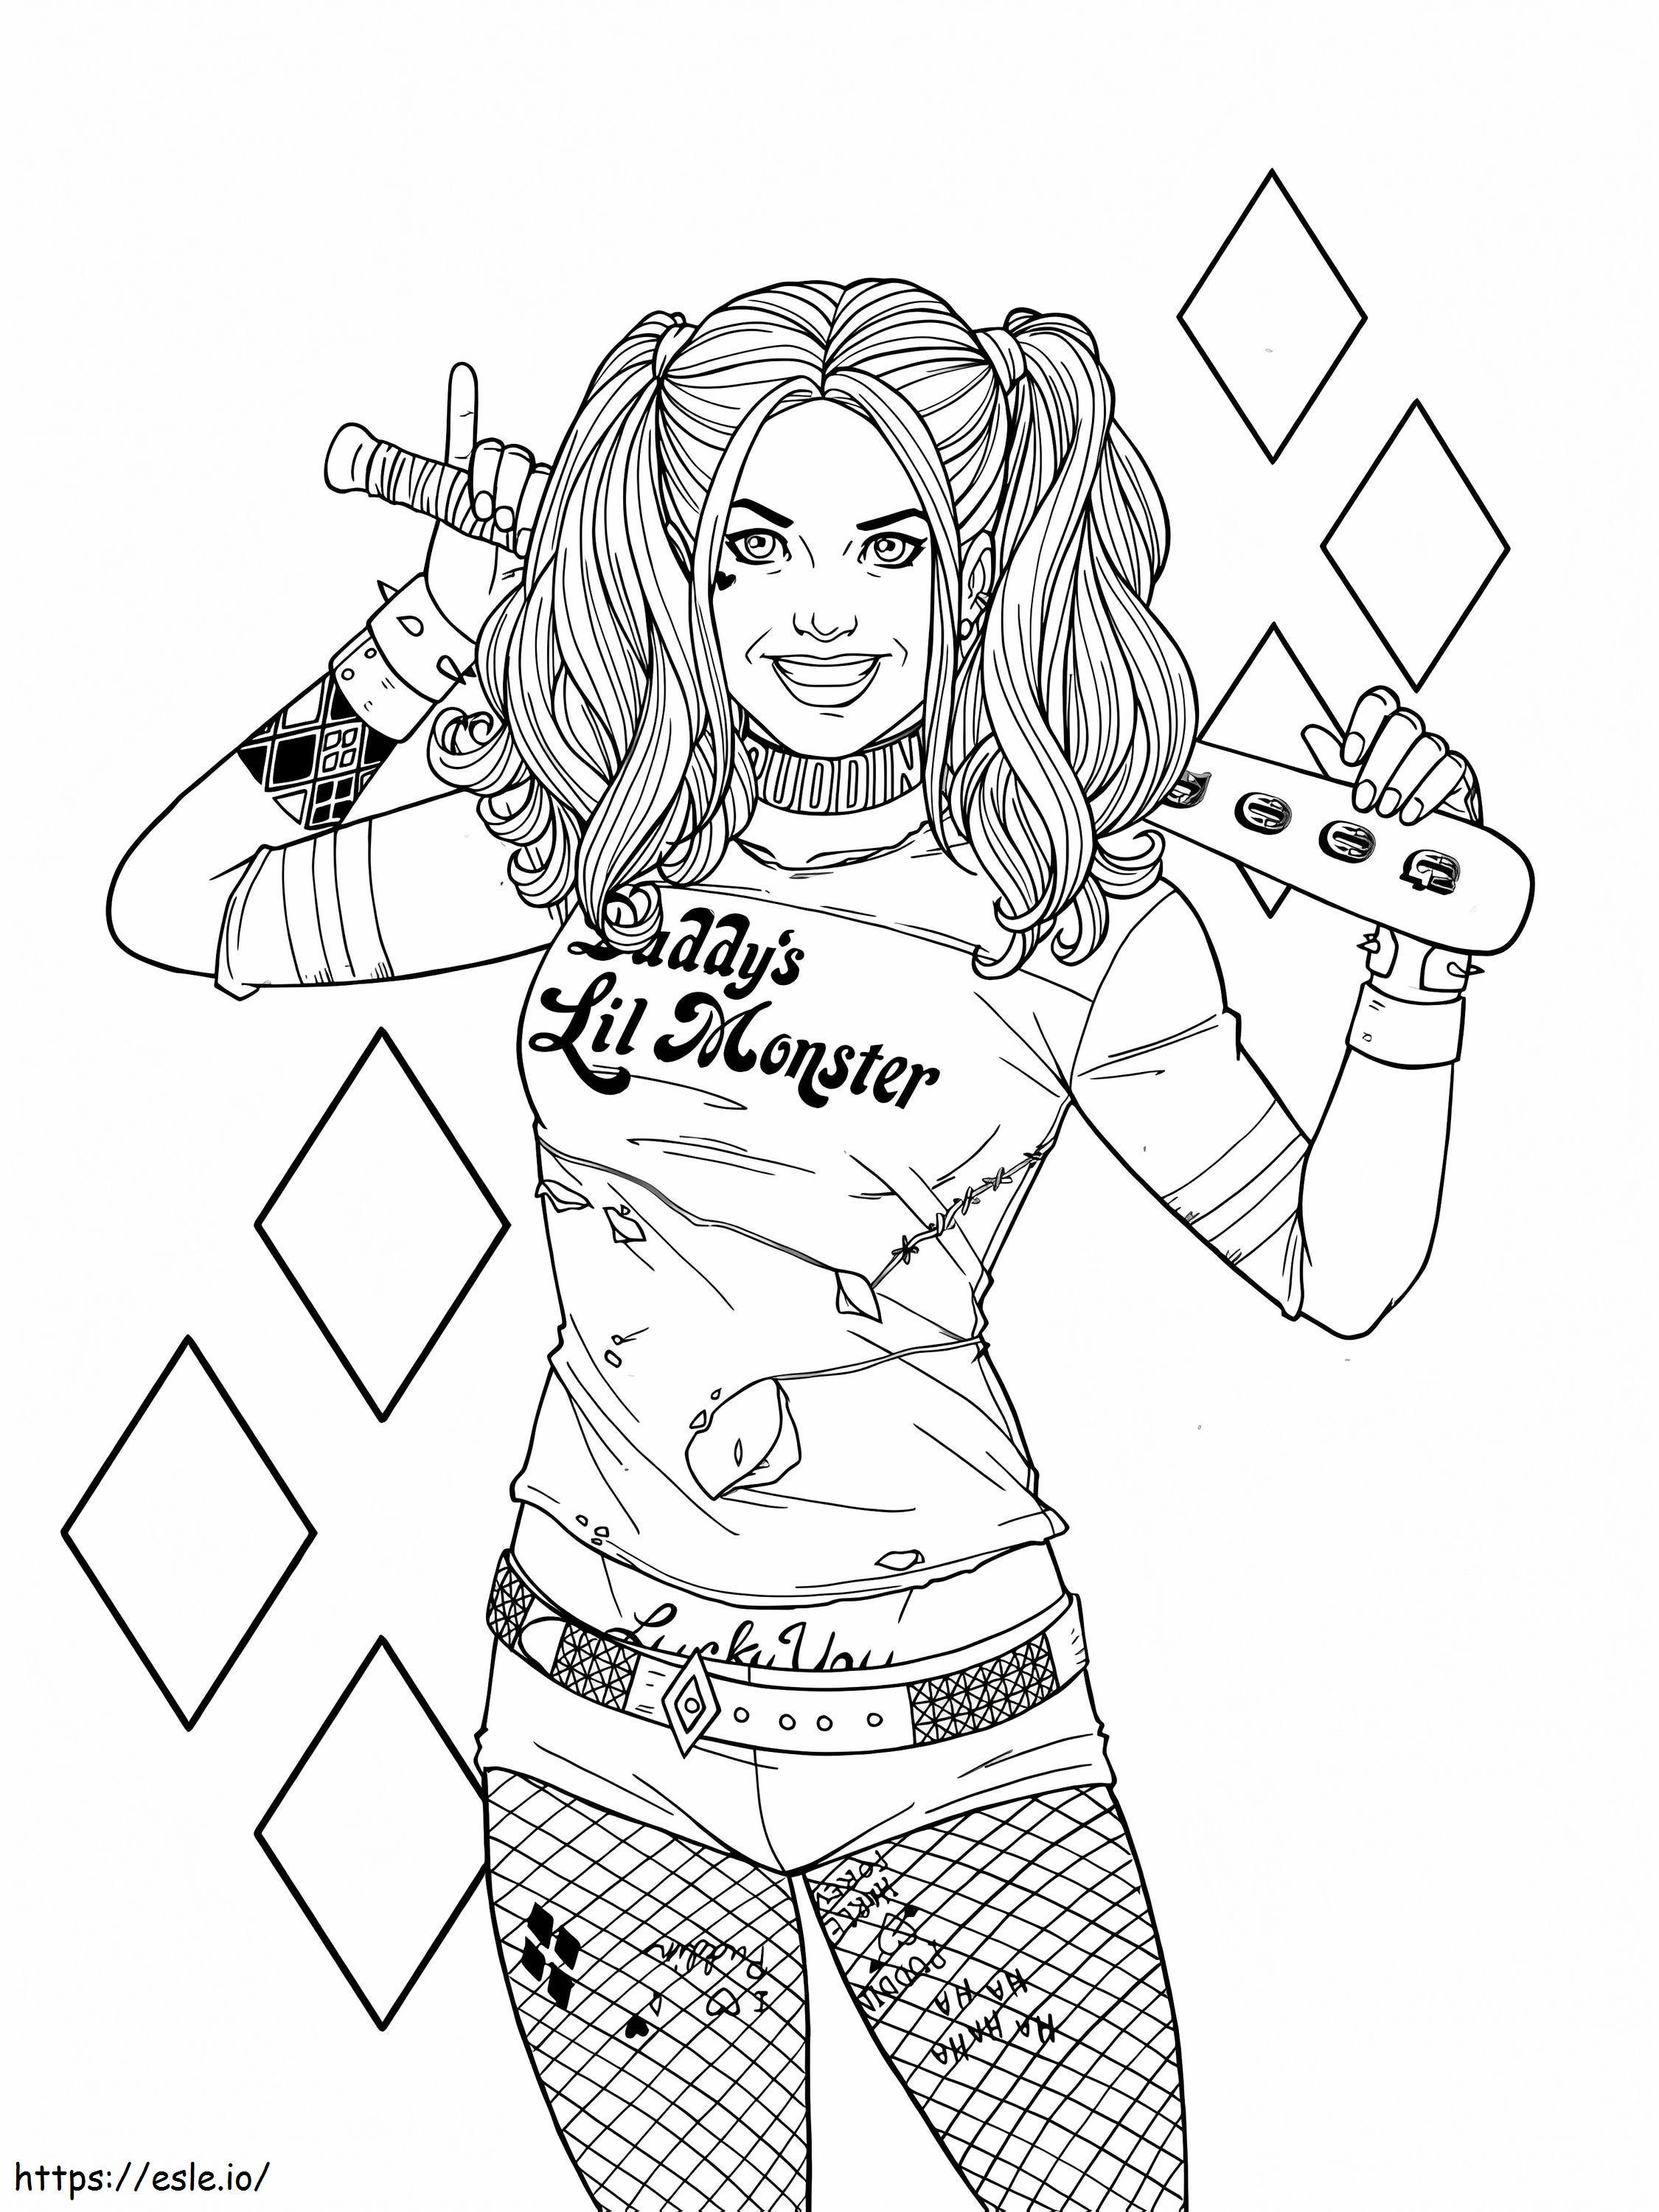 Funny Harley Quinn With A Baseball Bat coloring page